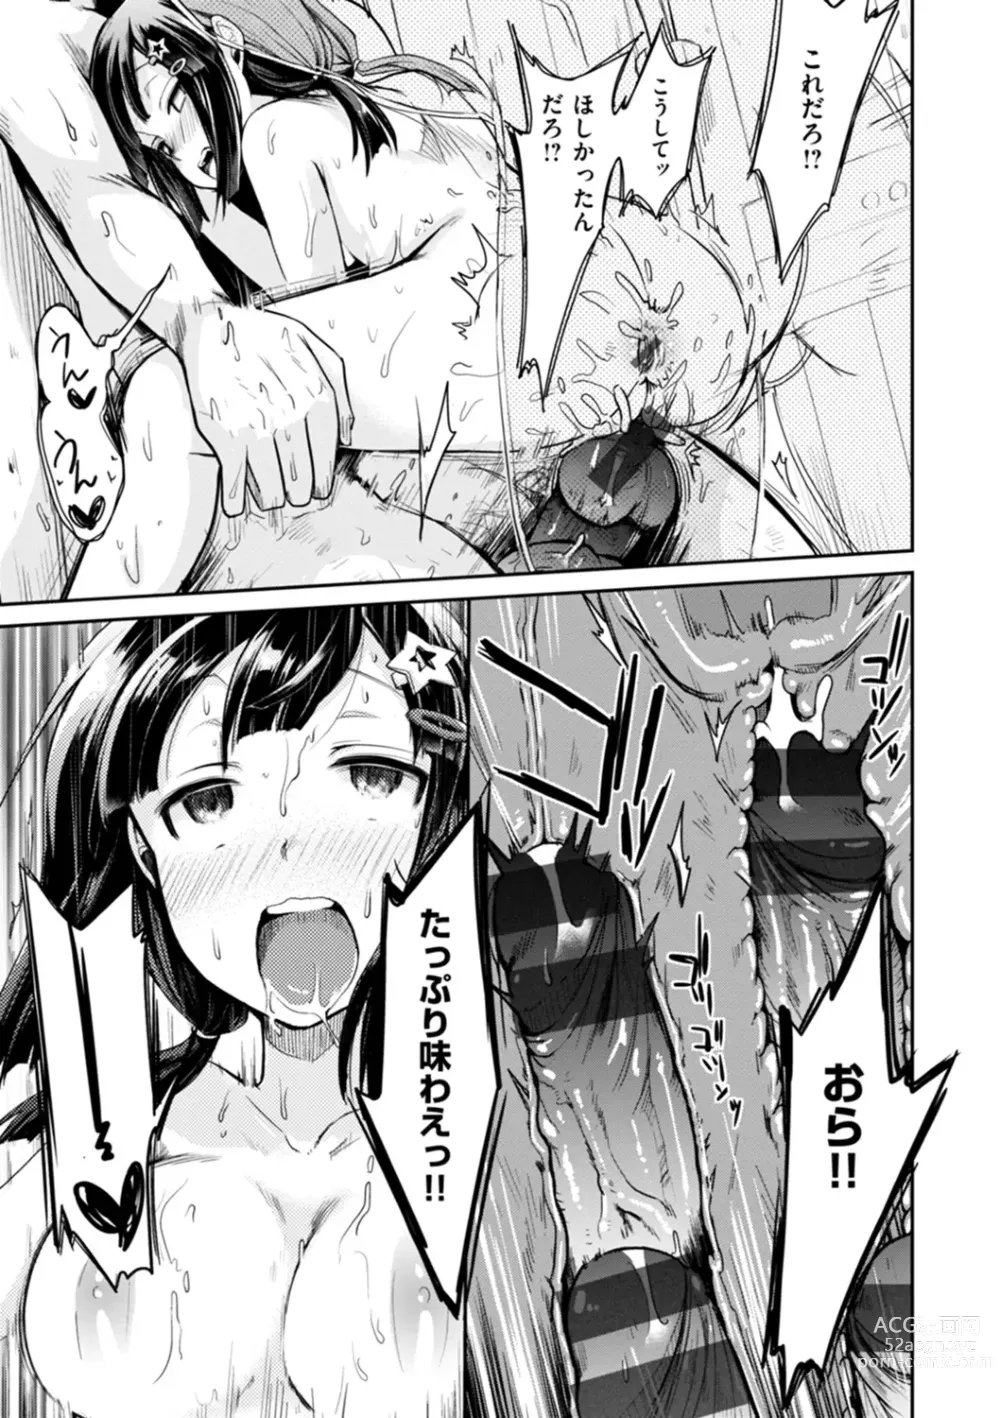 Page 189 of manga Kanojo no Jijou - Her Circumstances